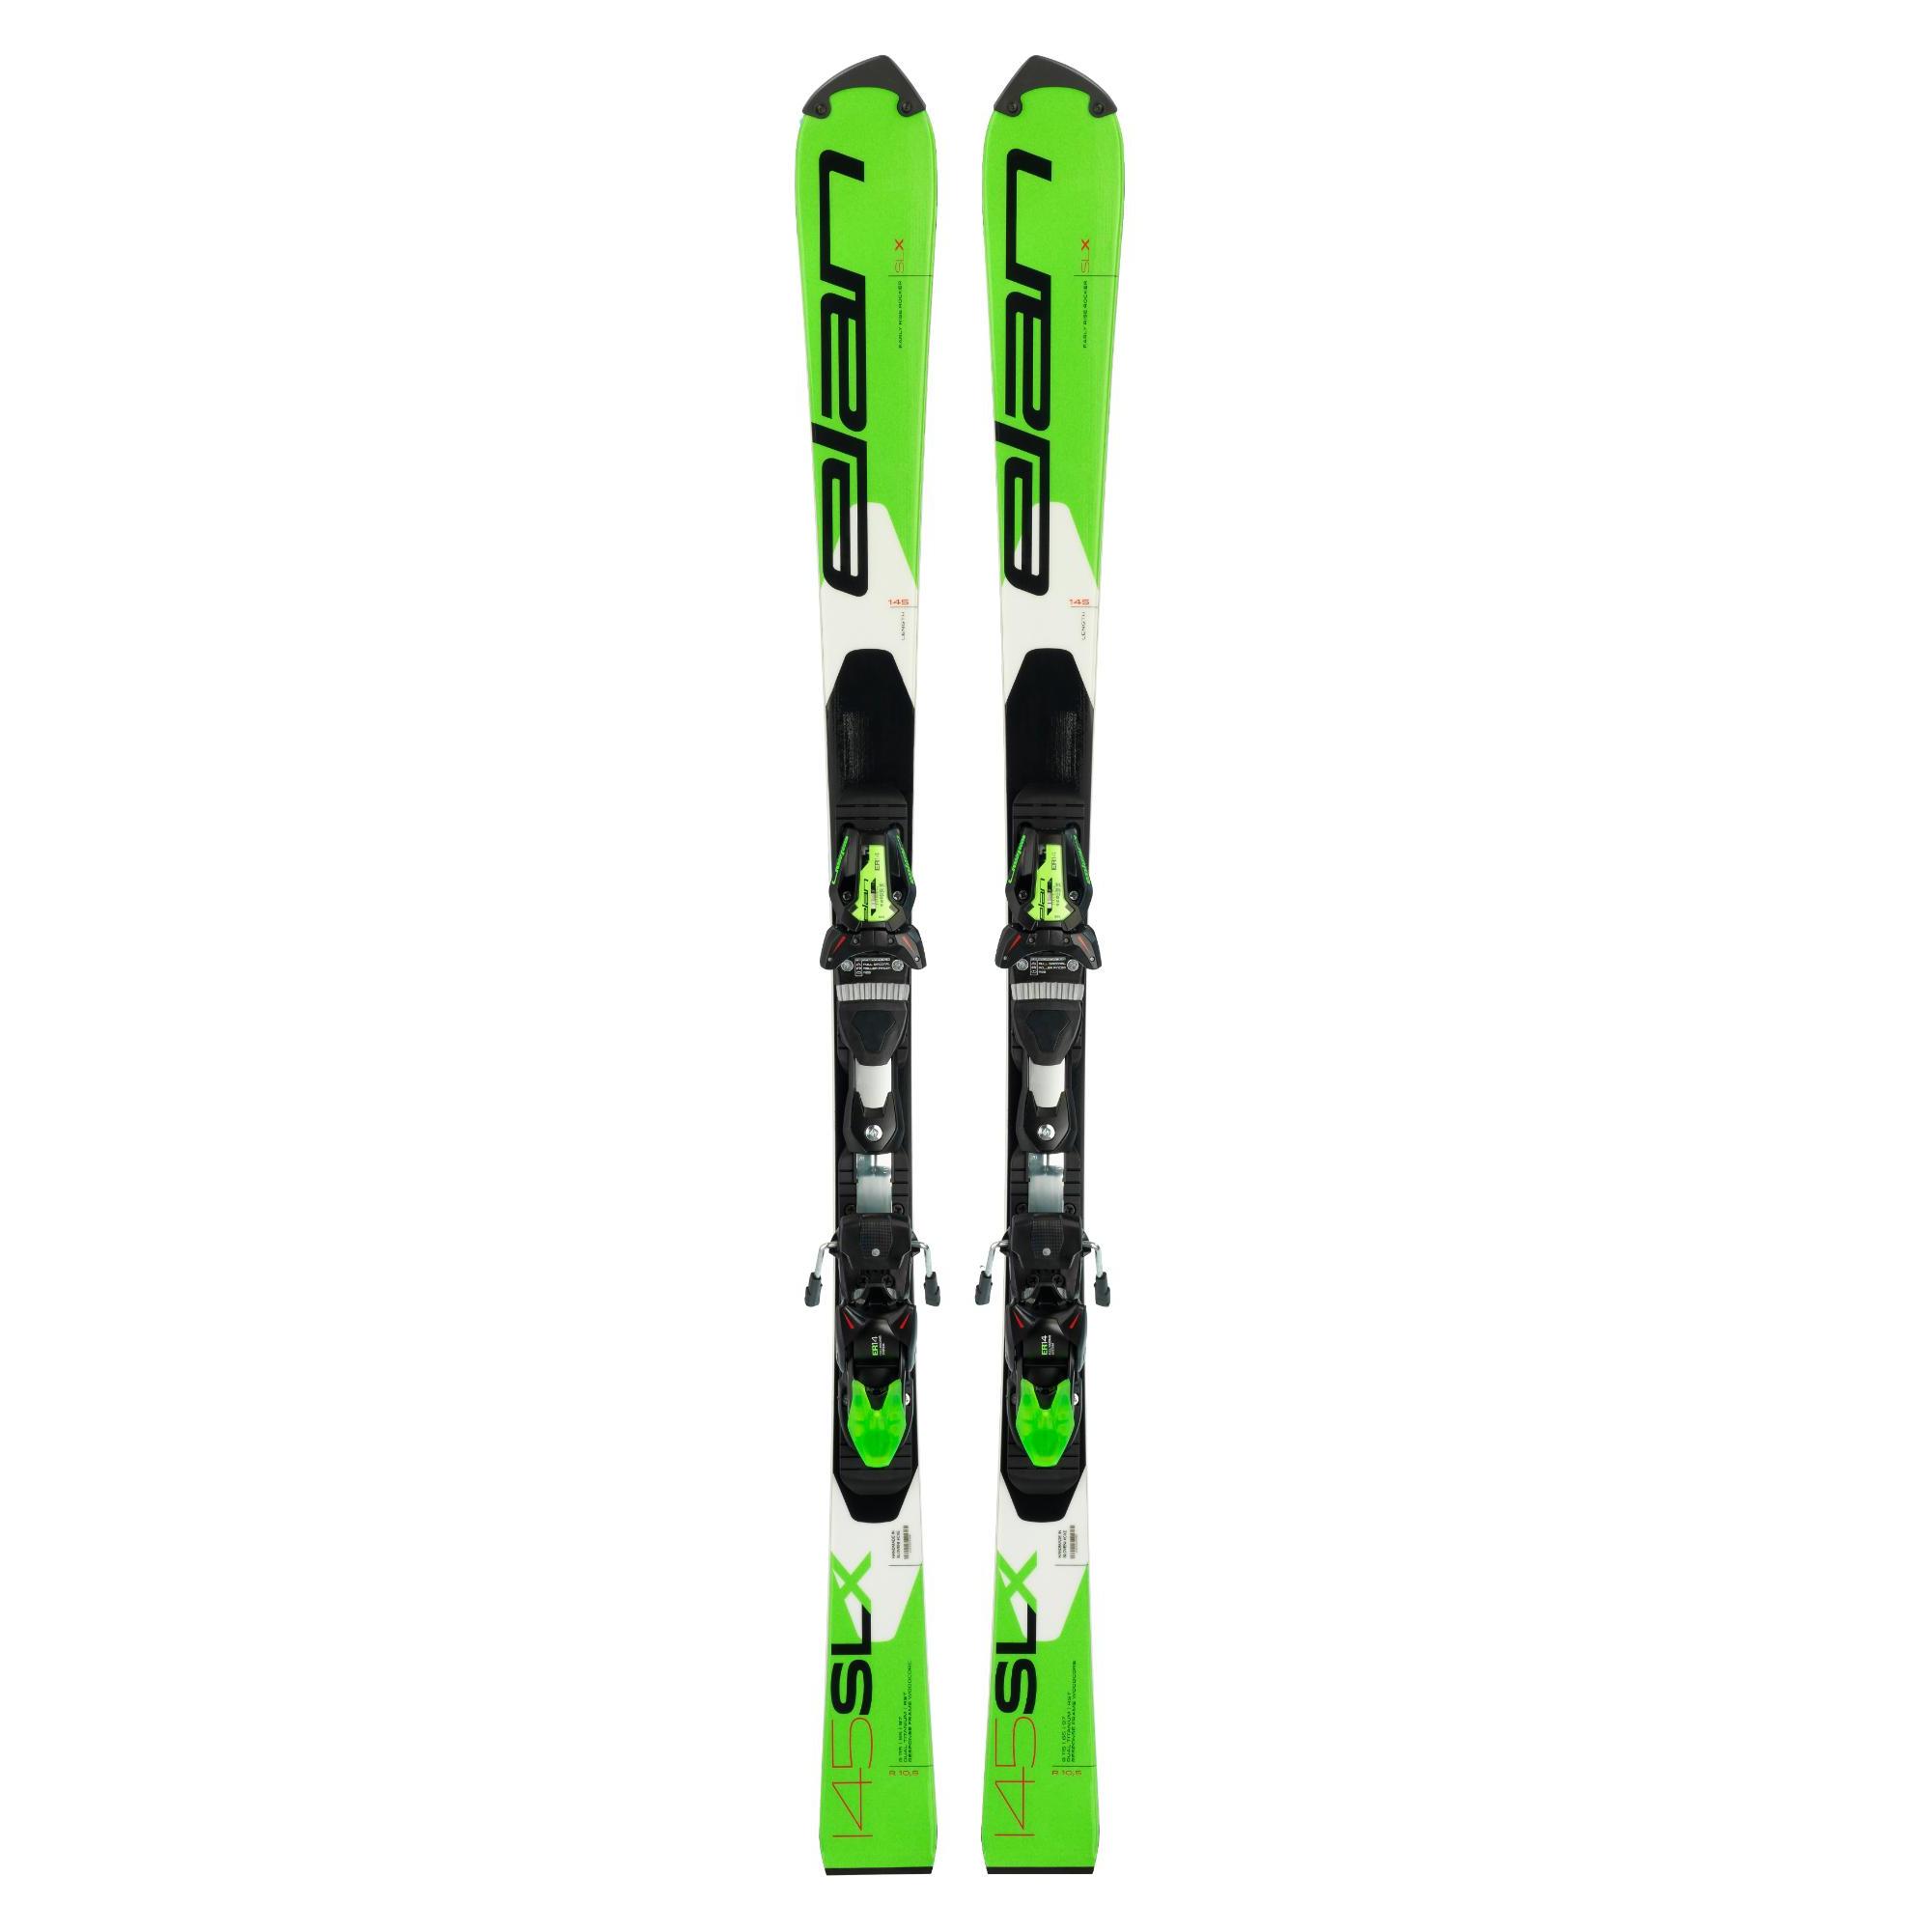 Горные лыжи Elan Slx Team Plate 2019, зеленые, 145 см